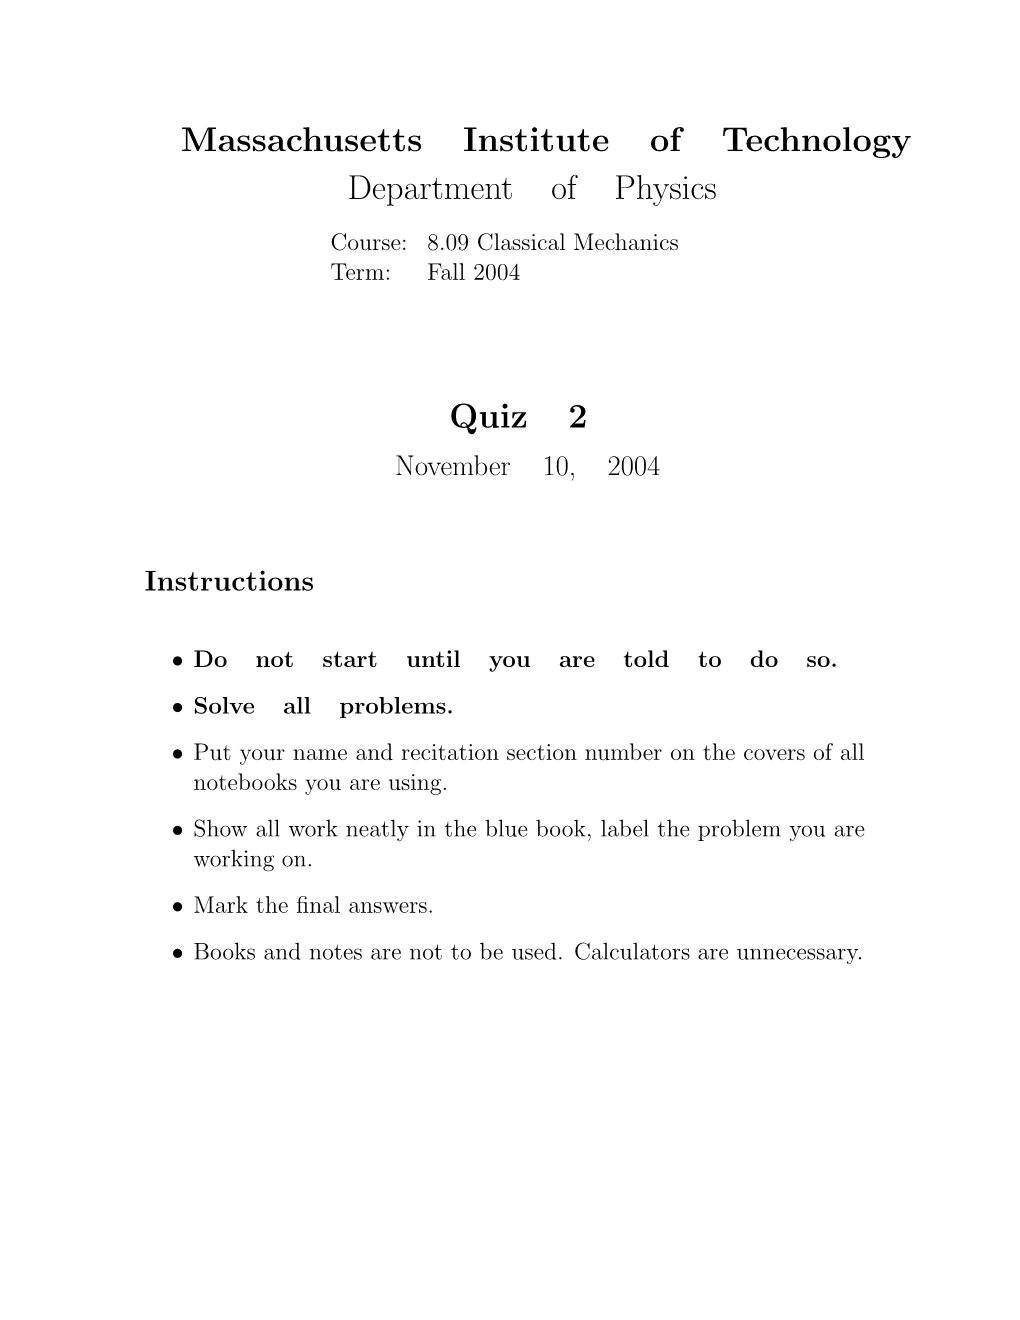 Massachusetts Institute of Technology Department of Physics Quiz 2